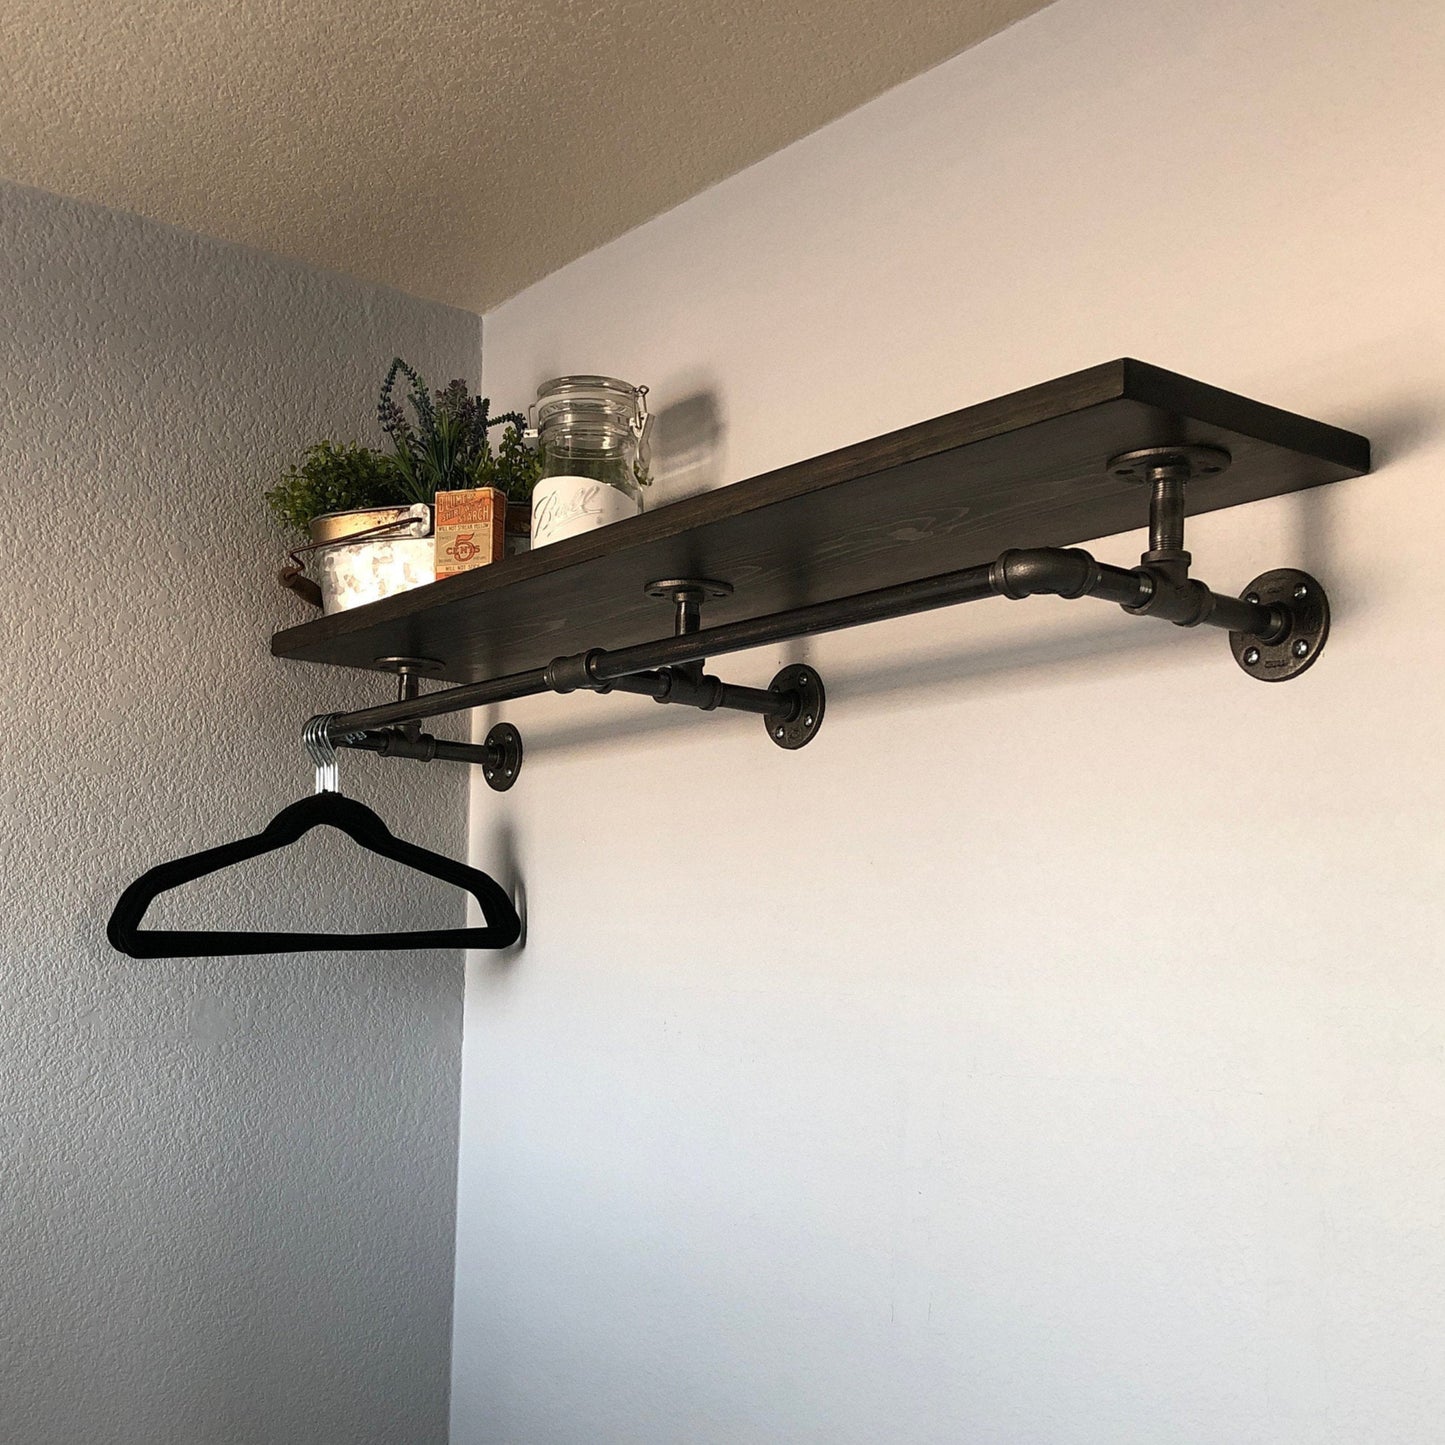 Extra Long Shelf with Hanger Rack (44 - 72)